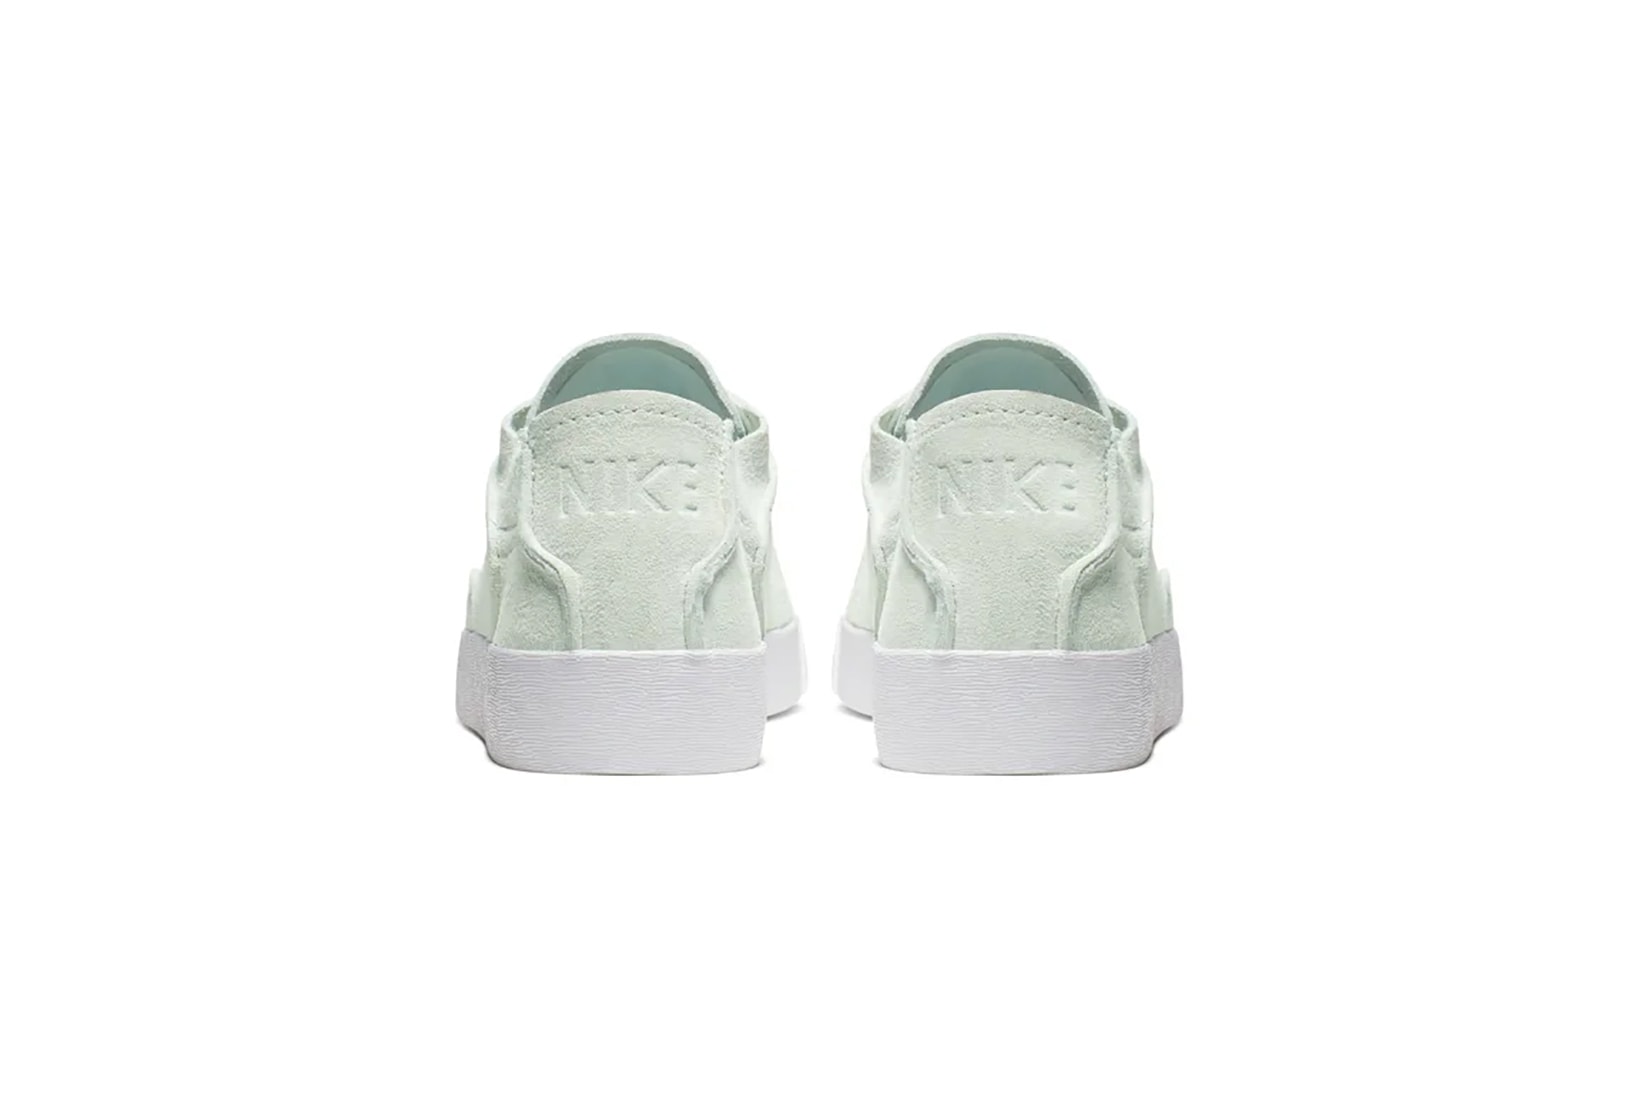 nike blazer low outburst deconstructed ghost aqua mint green suede sneakers sneakhead footwear shoes 